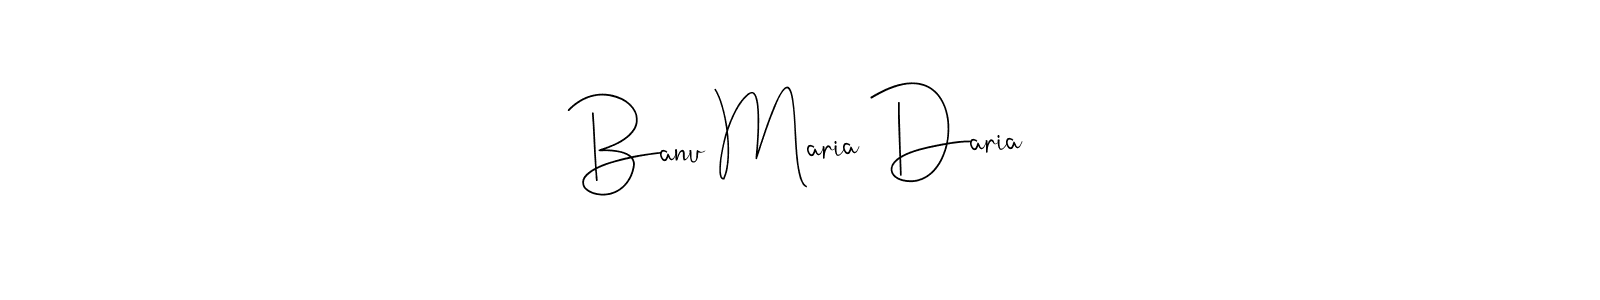 86+ Banu Maria Daria Name Signature Style Ideas | Excellent Electronic ...